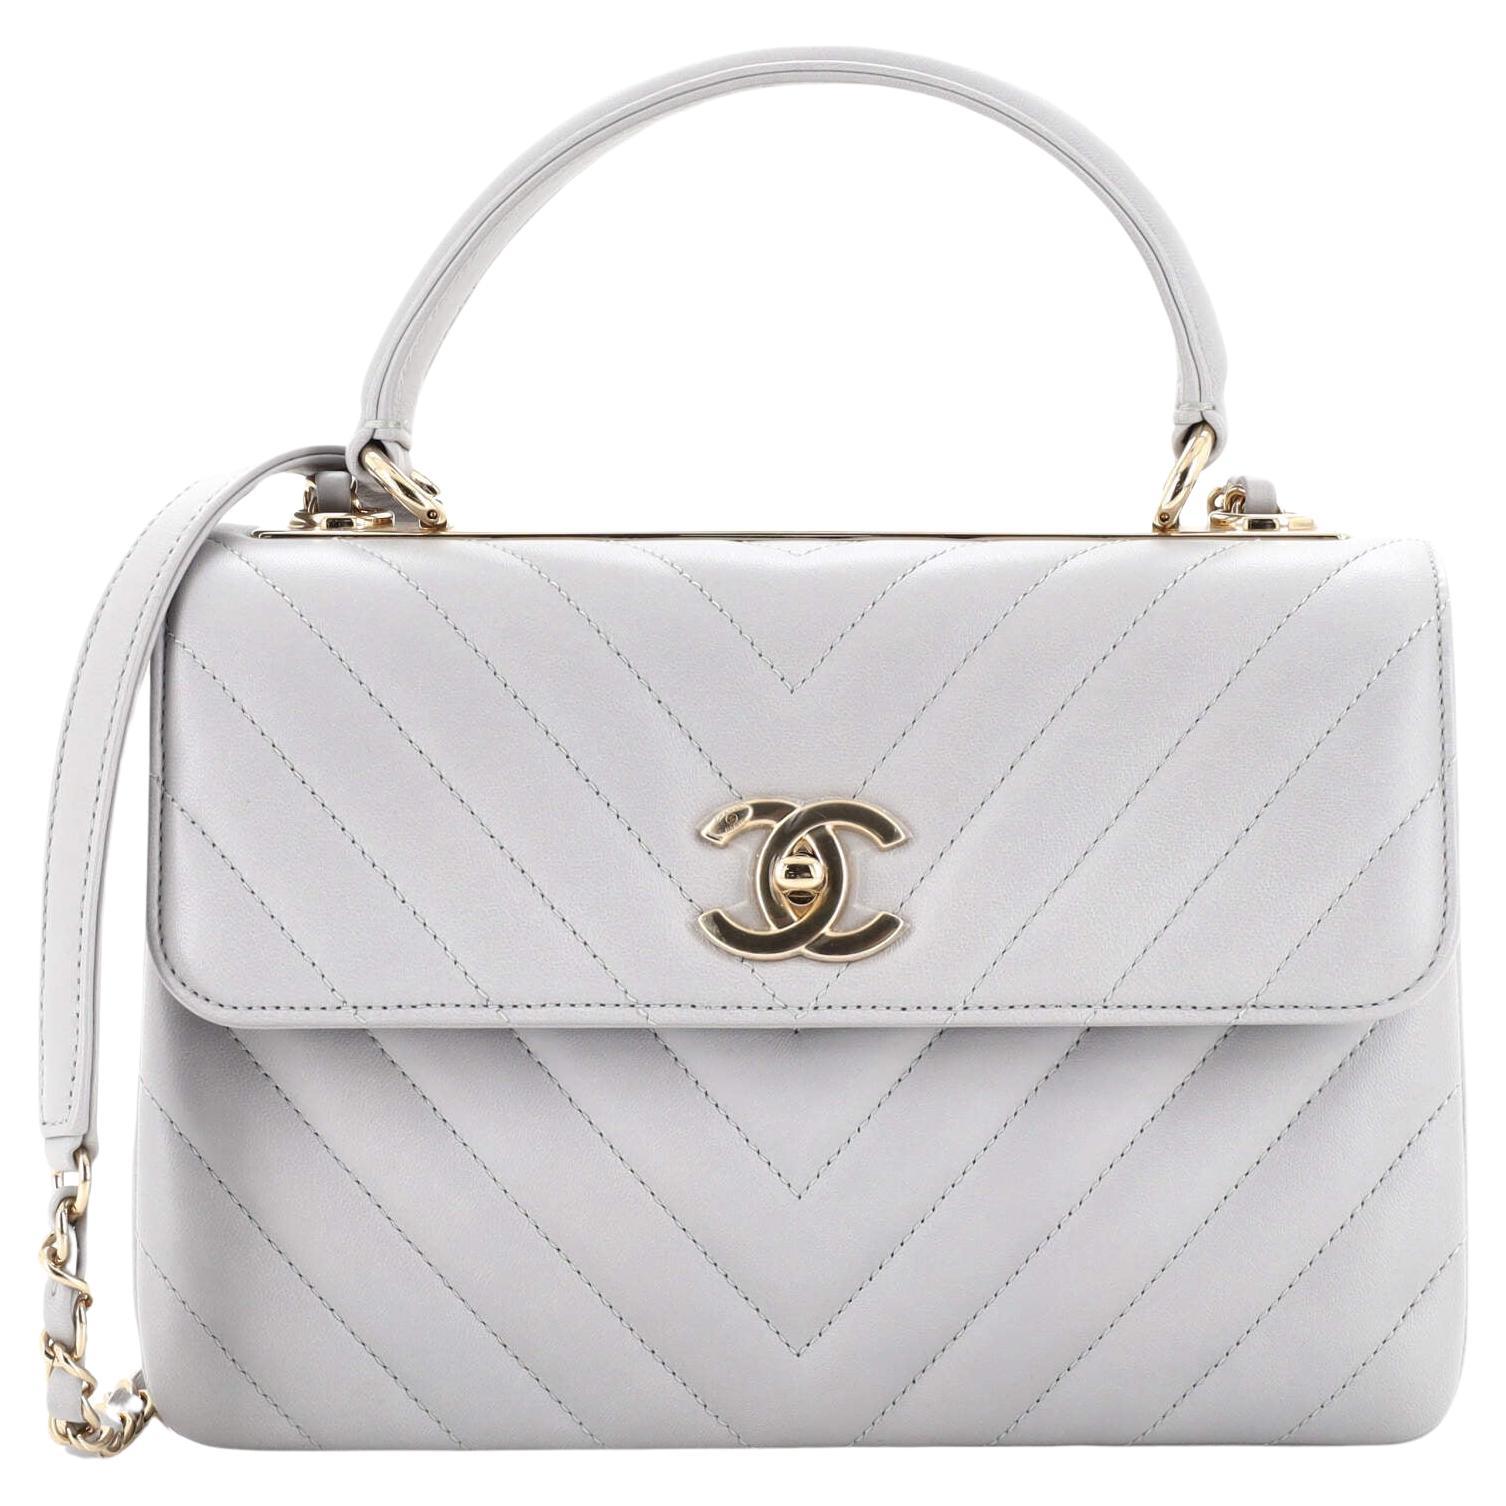 Chanel Trendy CC Top Handle Tasche aus Chevron-Lammfell